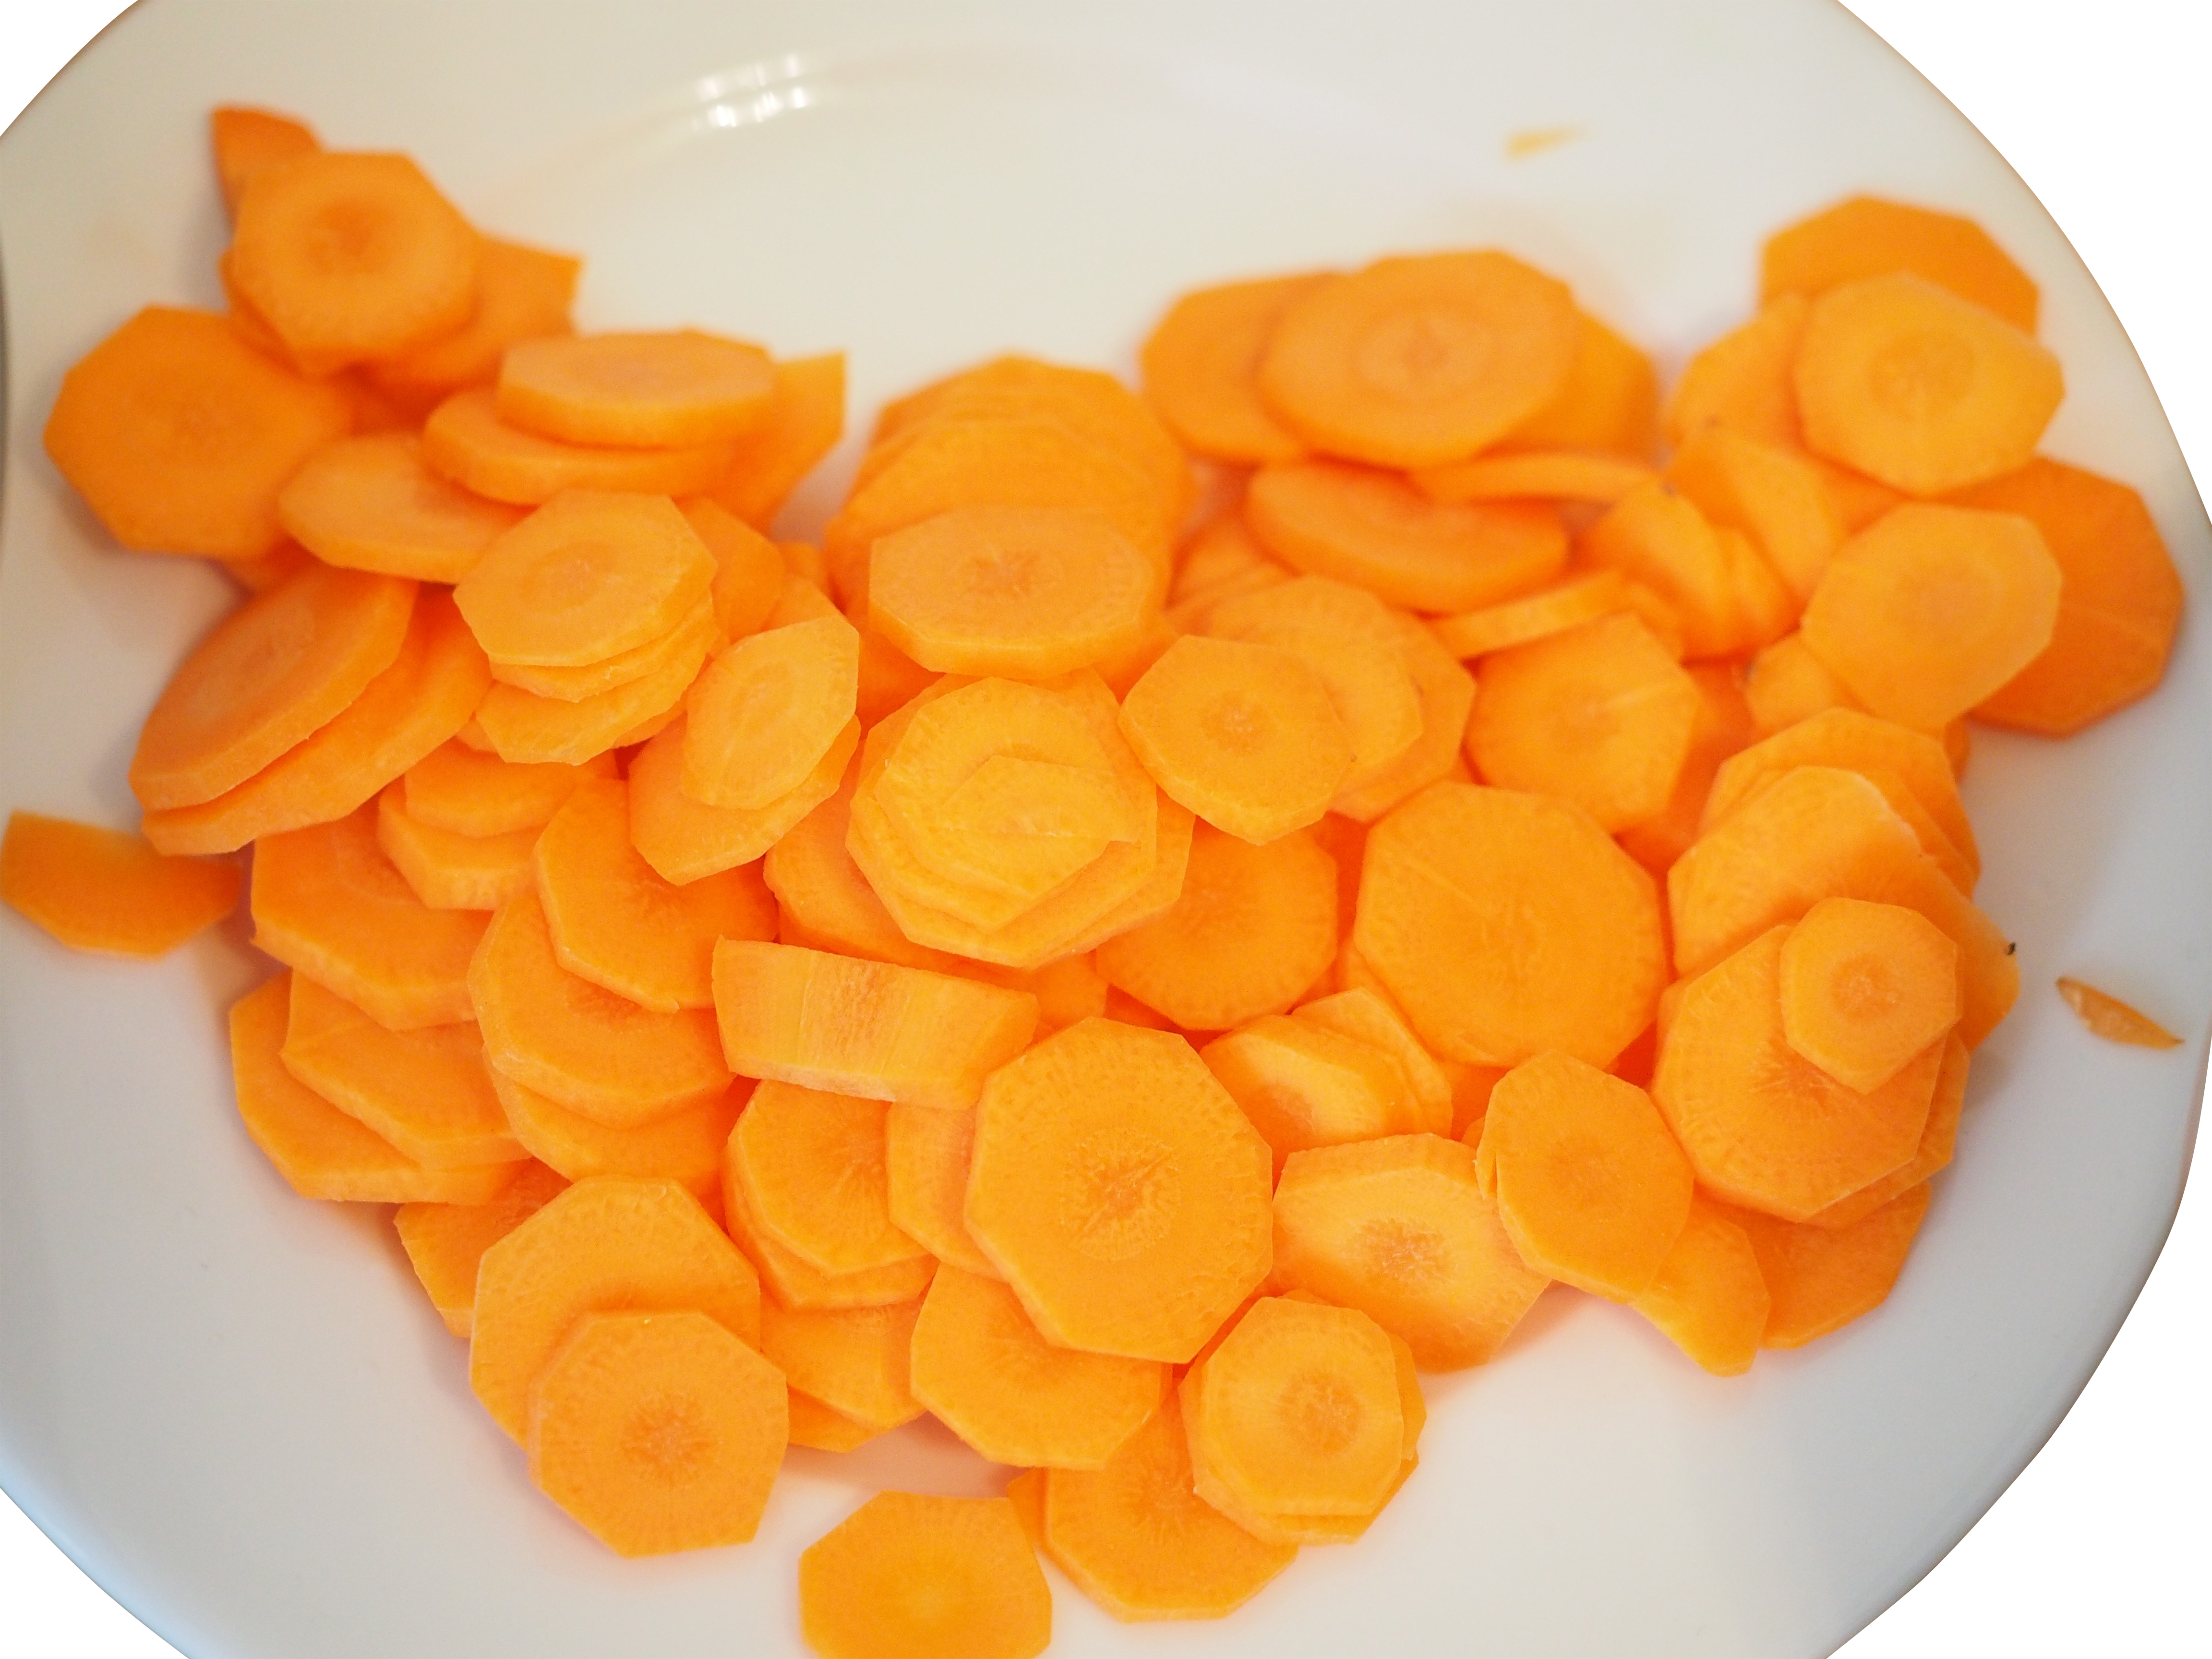 Orange Chopped Carrots in a plate